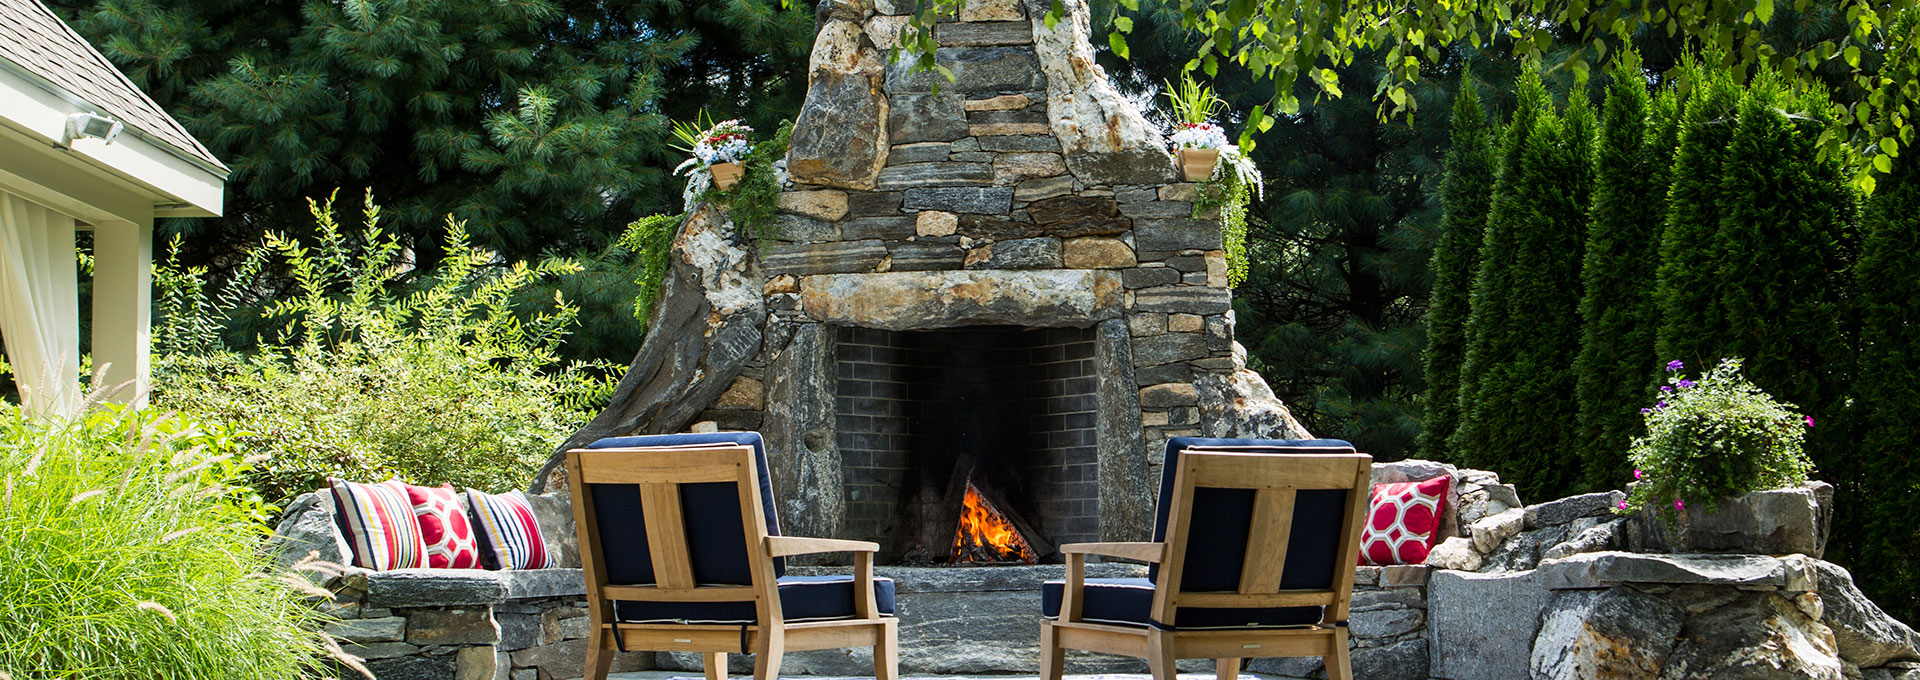 Tyra outdoor fireplace